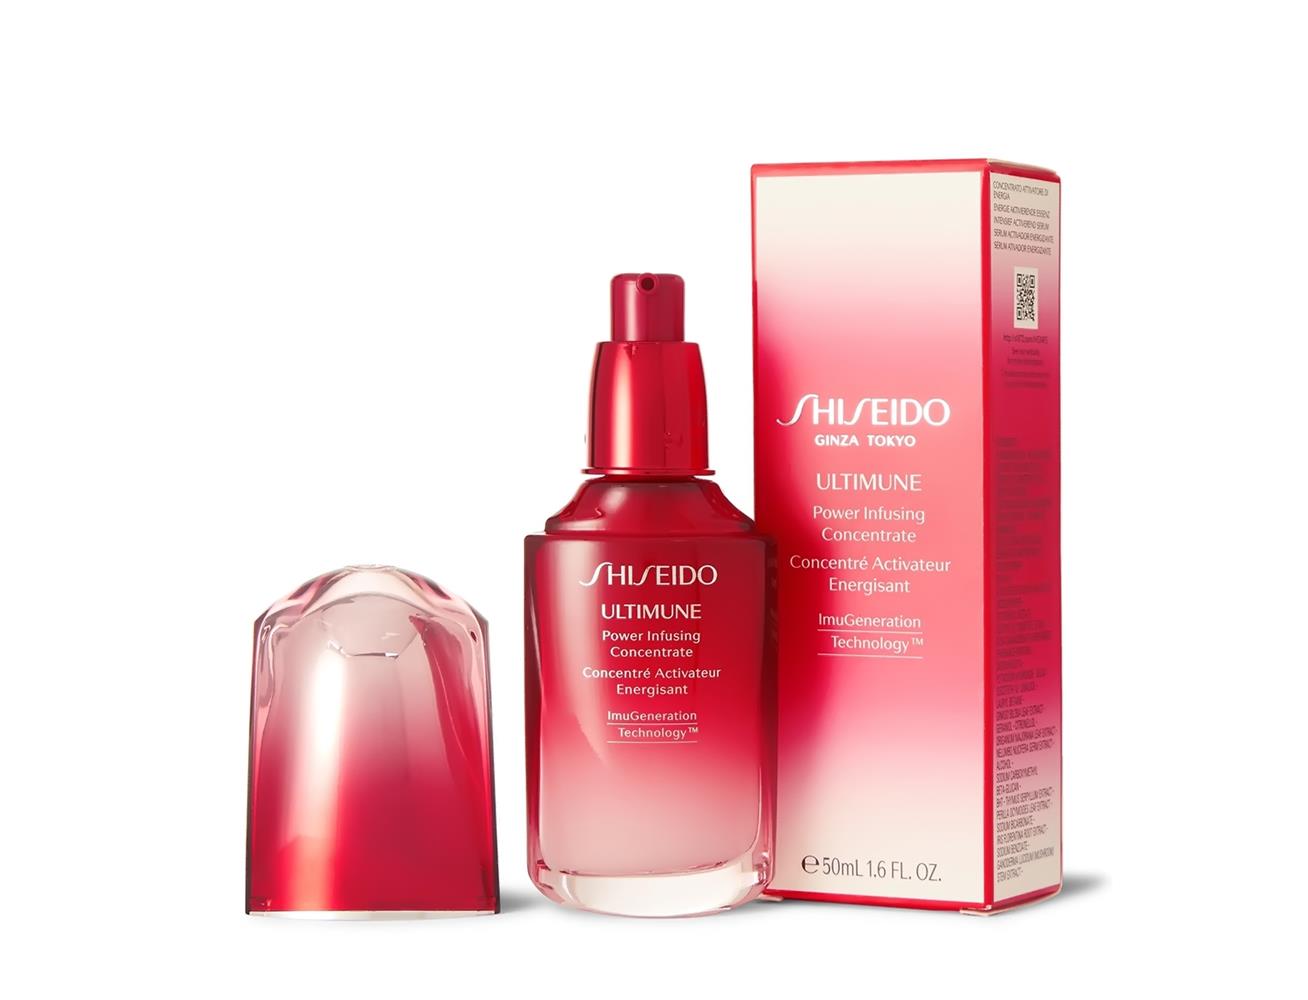 Ultimune shiseido power infusing. Ultimune концентрат шисейдо Power infusing. Концентрат Shiseido Ultimune Power infusing Concentrate. Сыворотка шисейдо. Шисейдо для волос.